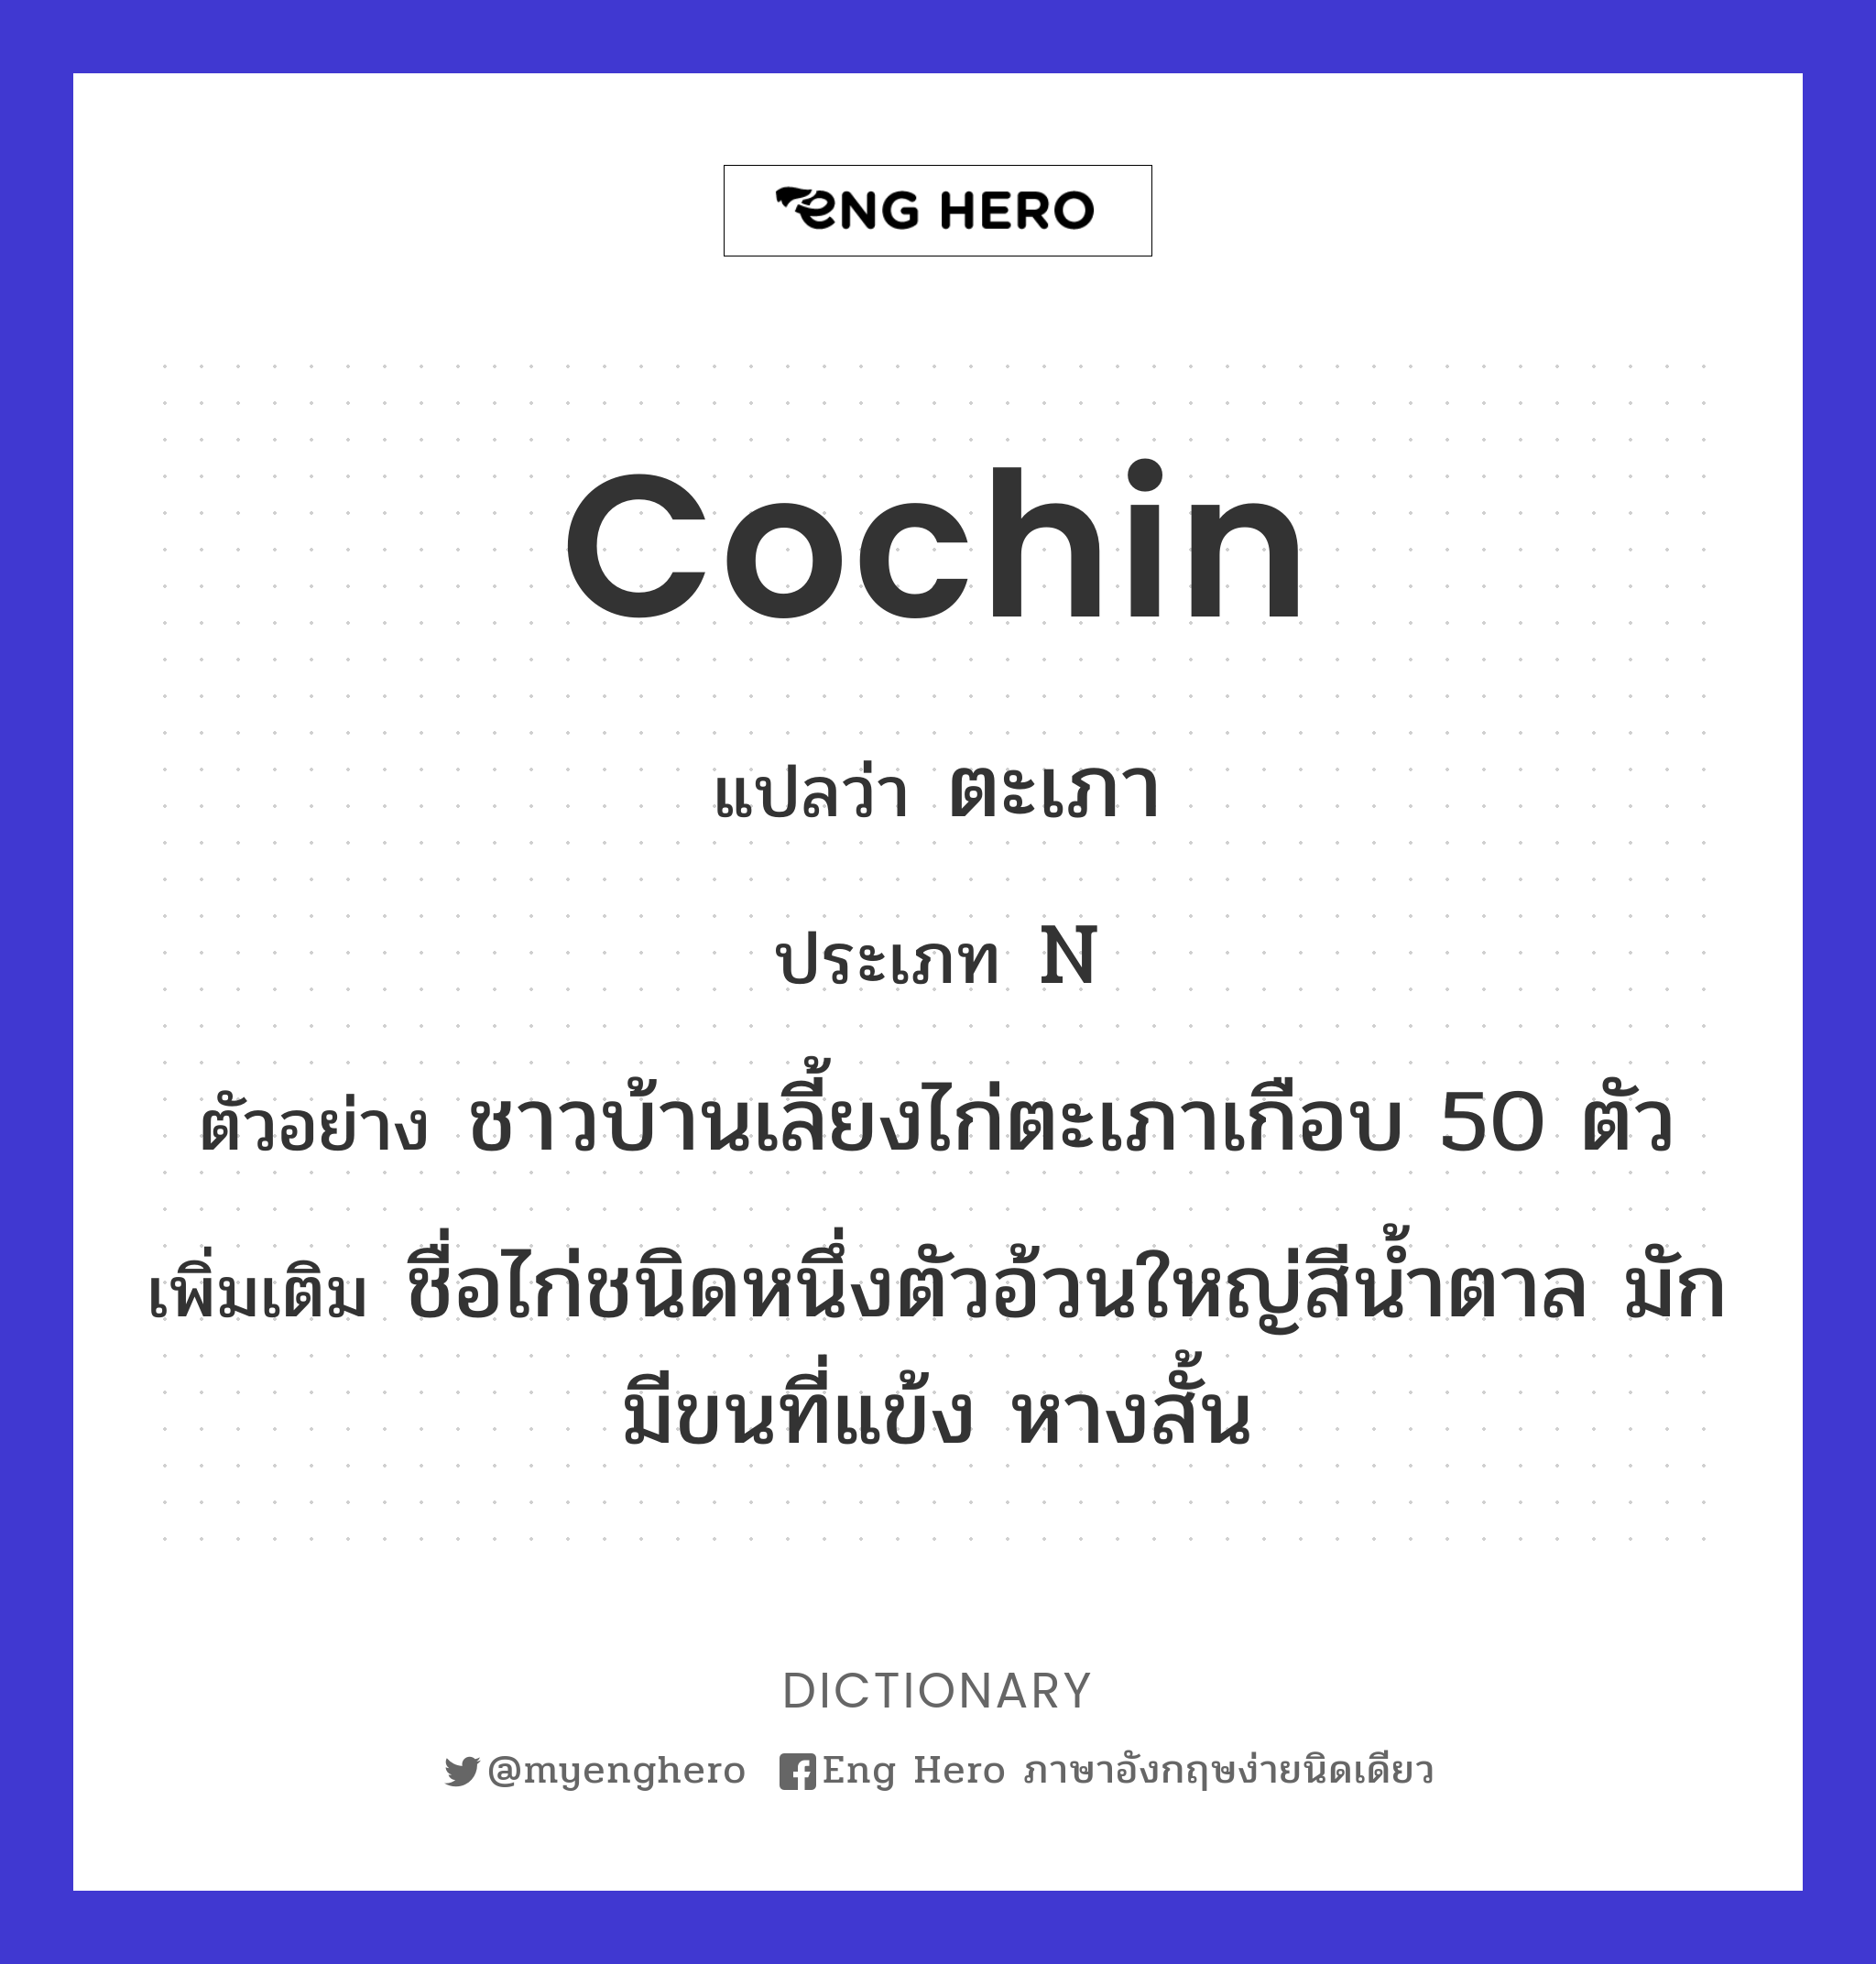 Cochin